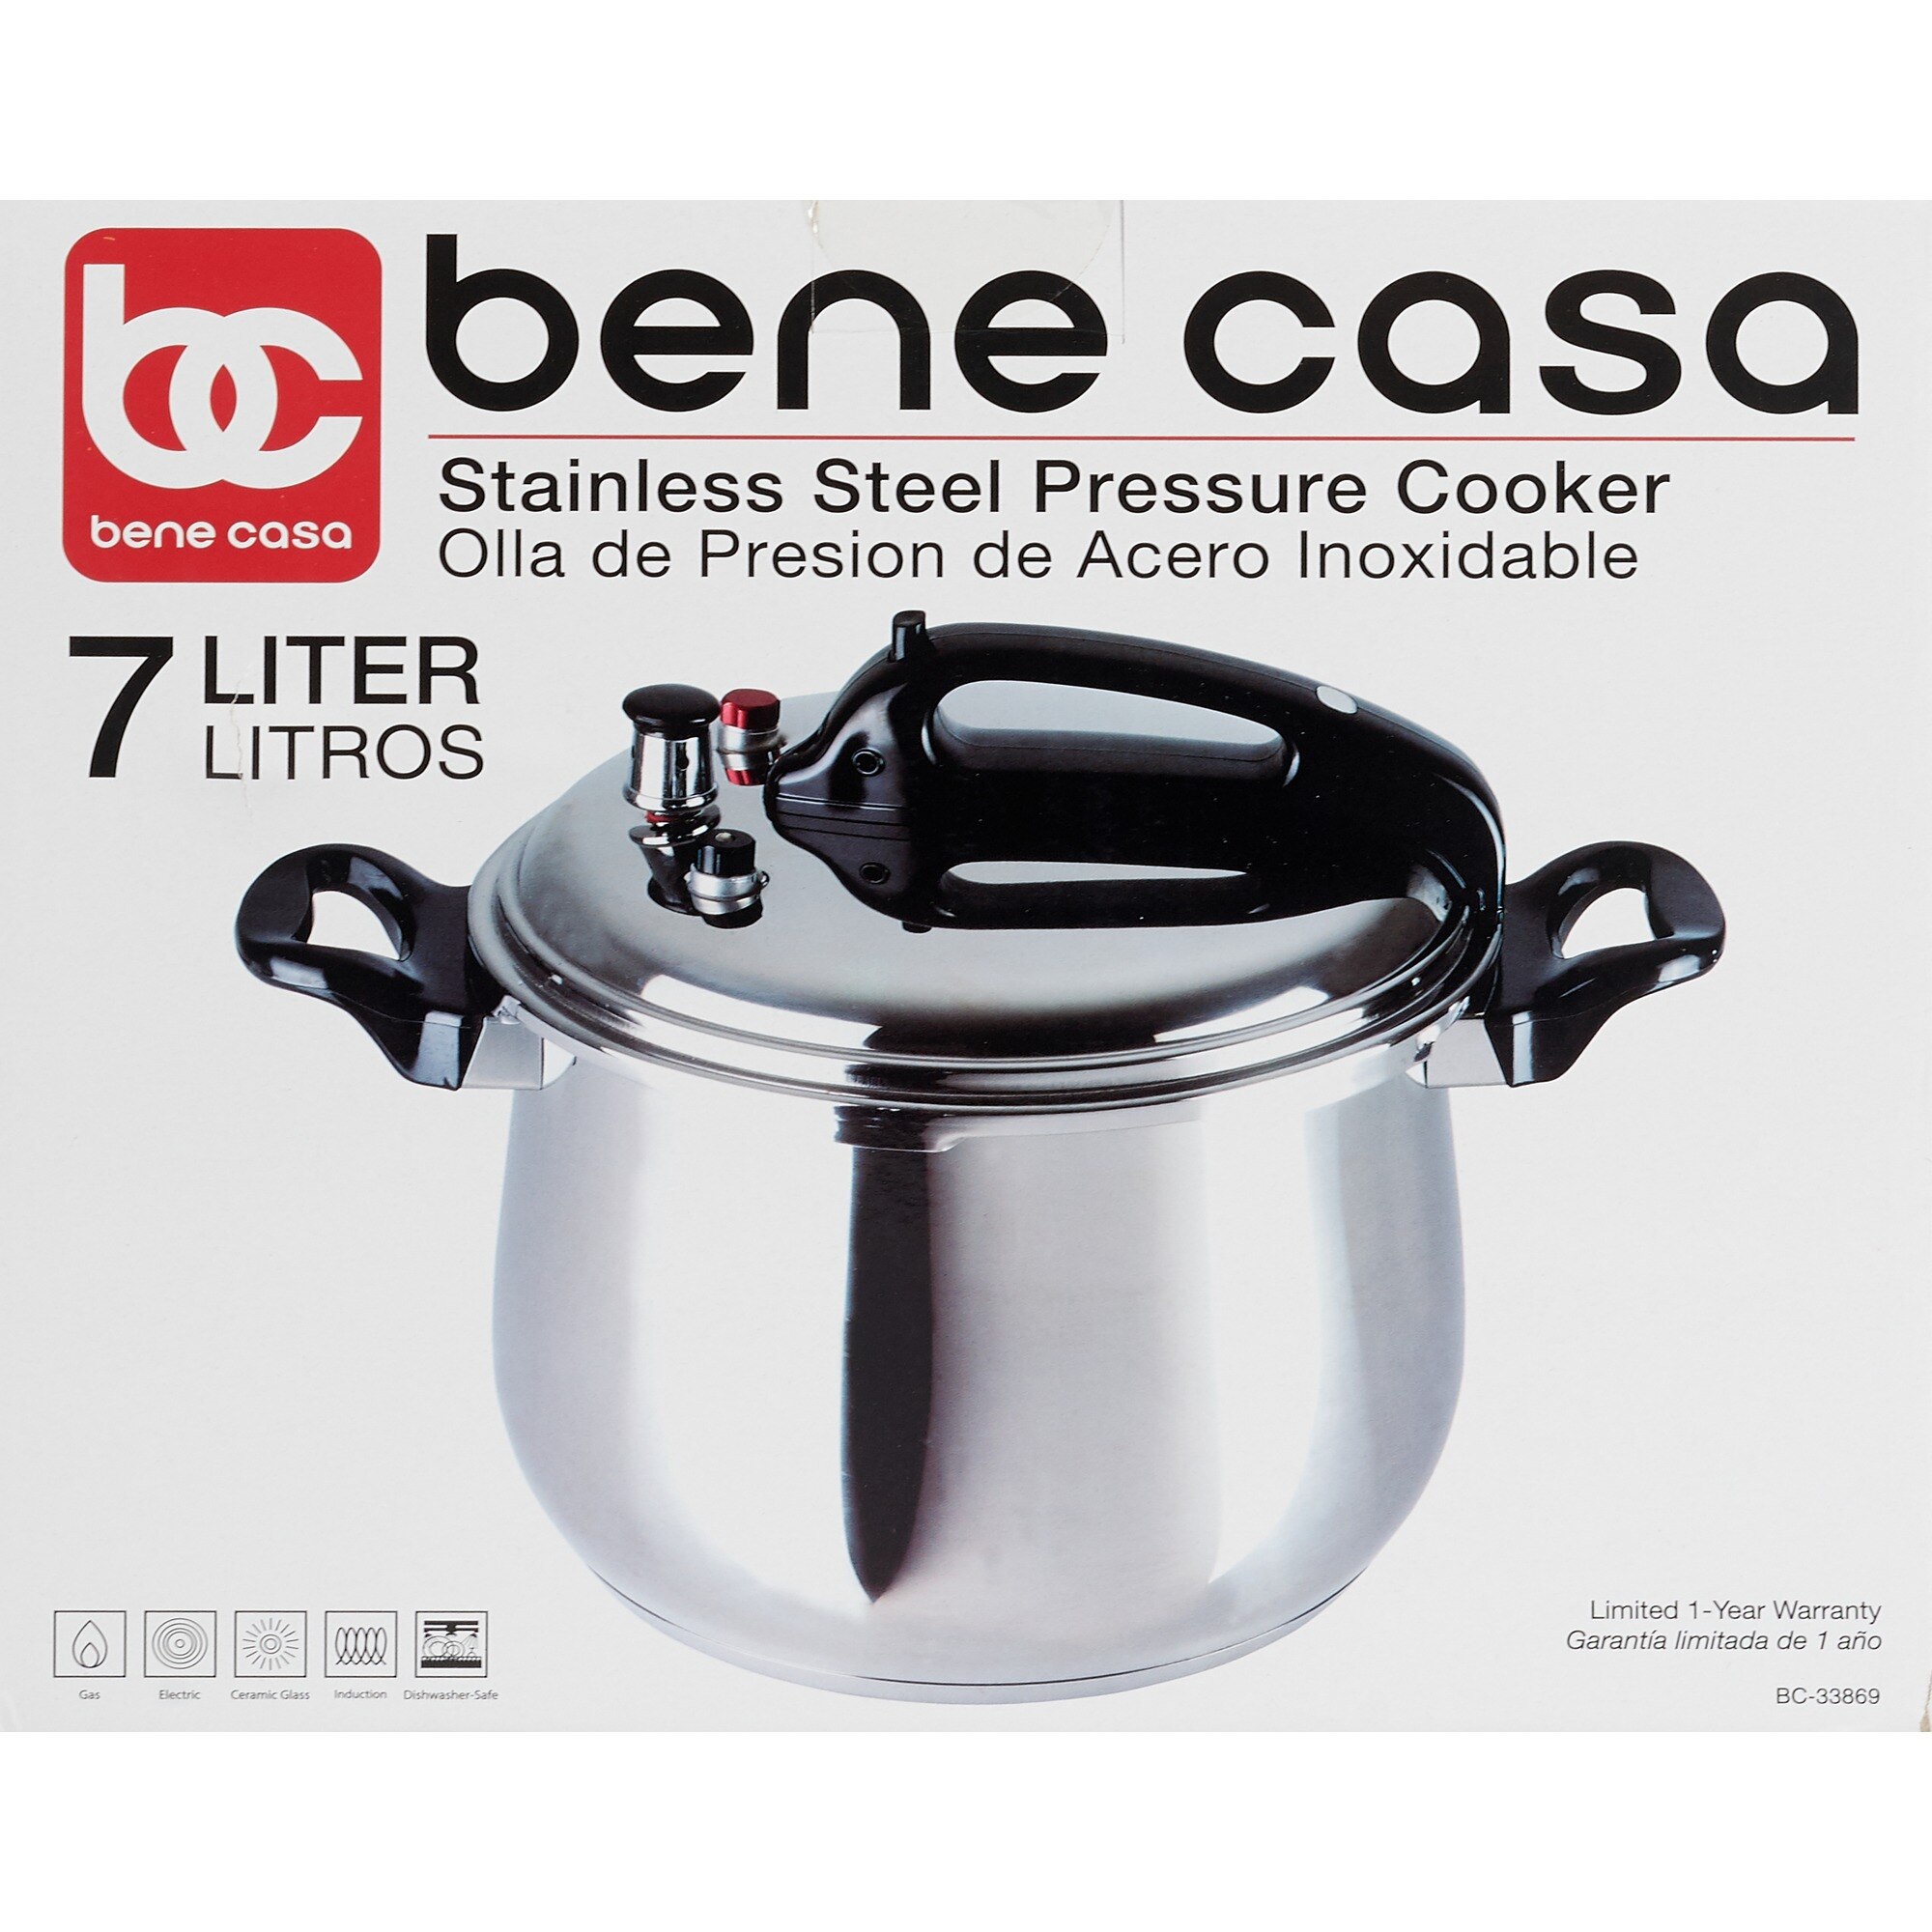 Bene Casa - Aluminum Pressure Cooker (4 Quart) - Includes Pressure Alarm  and a Sure-locking Lid System - Dishwasher Safe